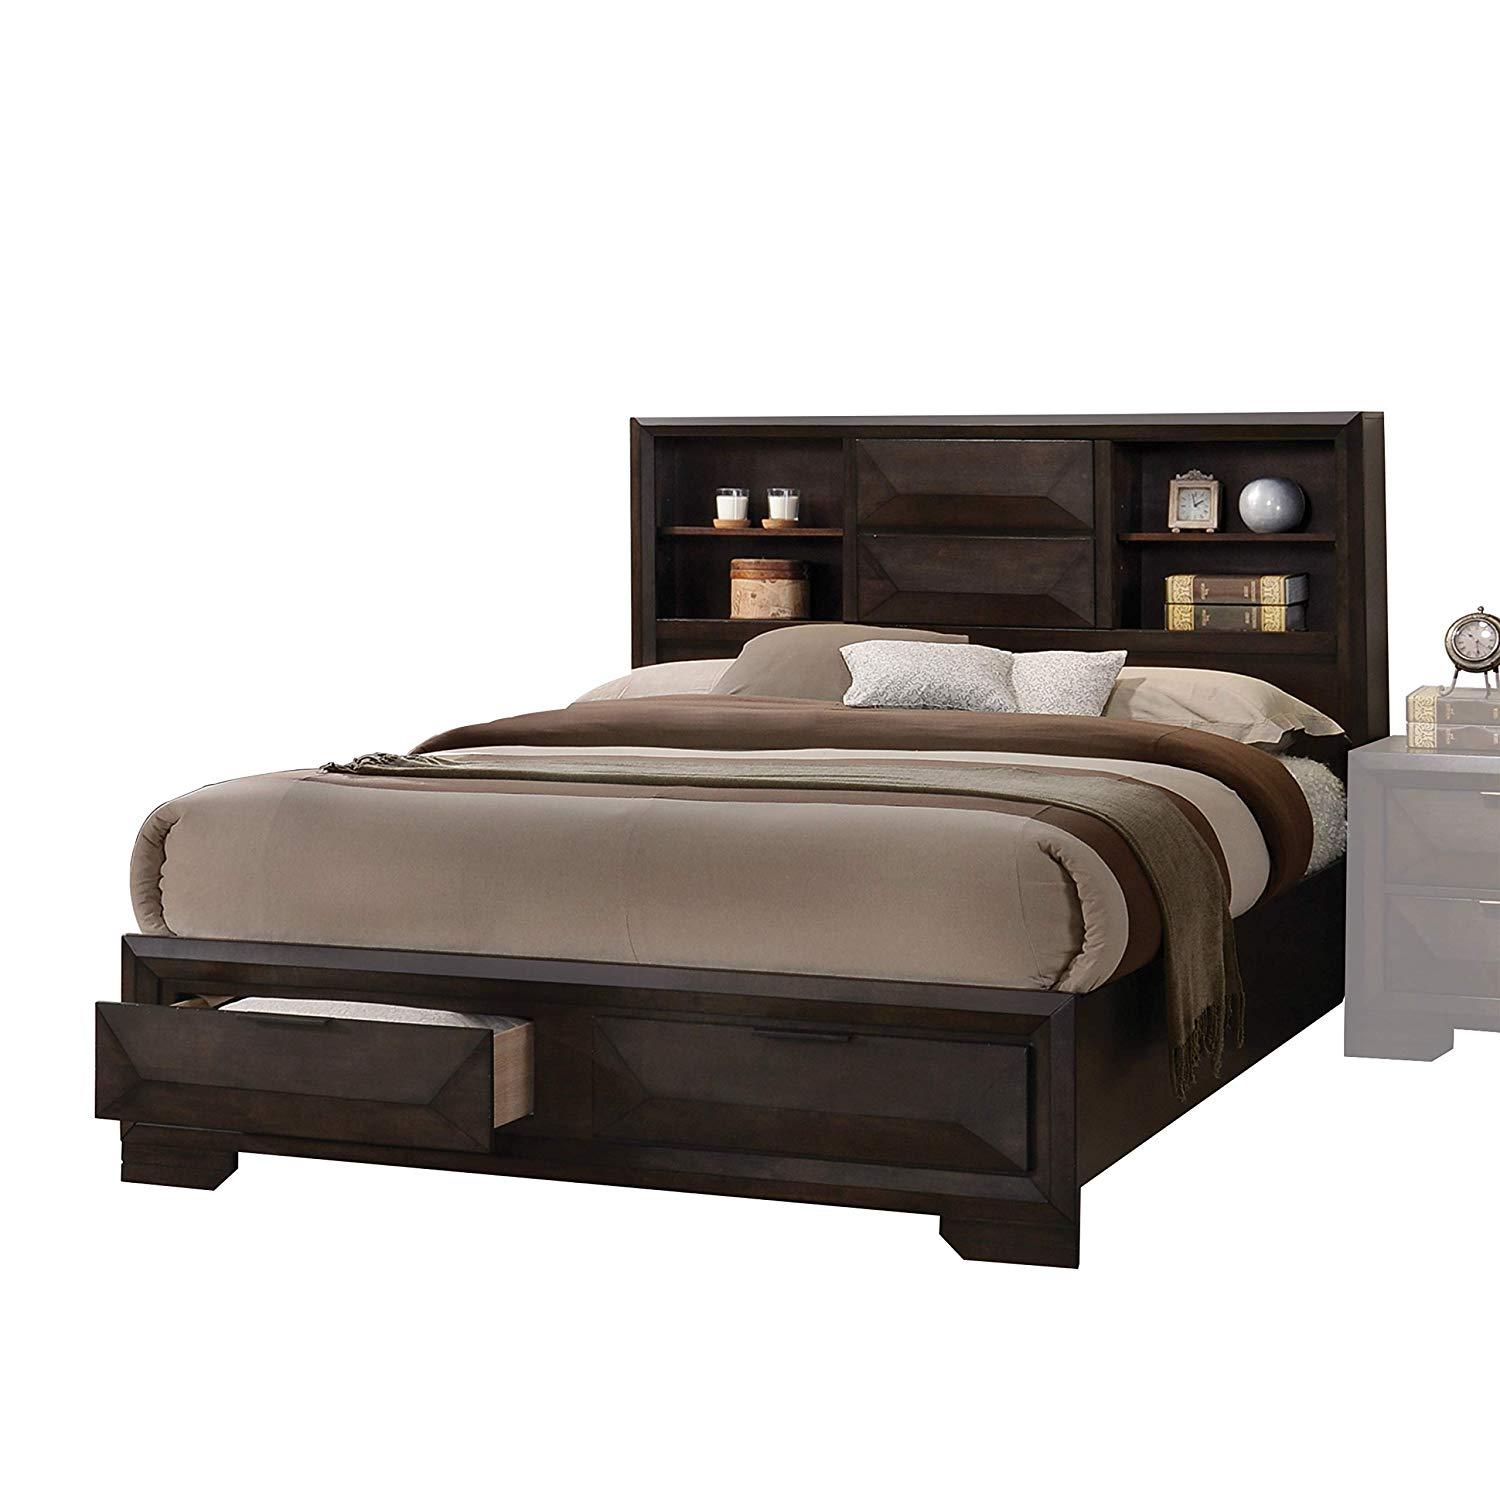 Transitional Storage Bed Merveille-22870Q 22870Q in Espresso Matte Lacquer